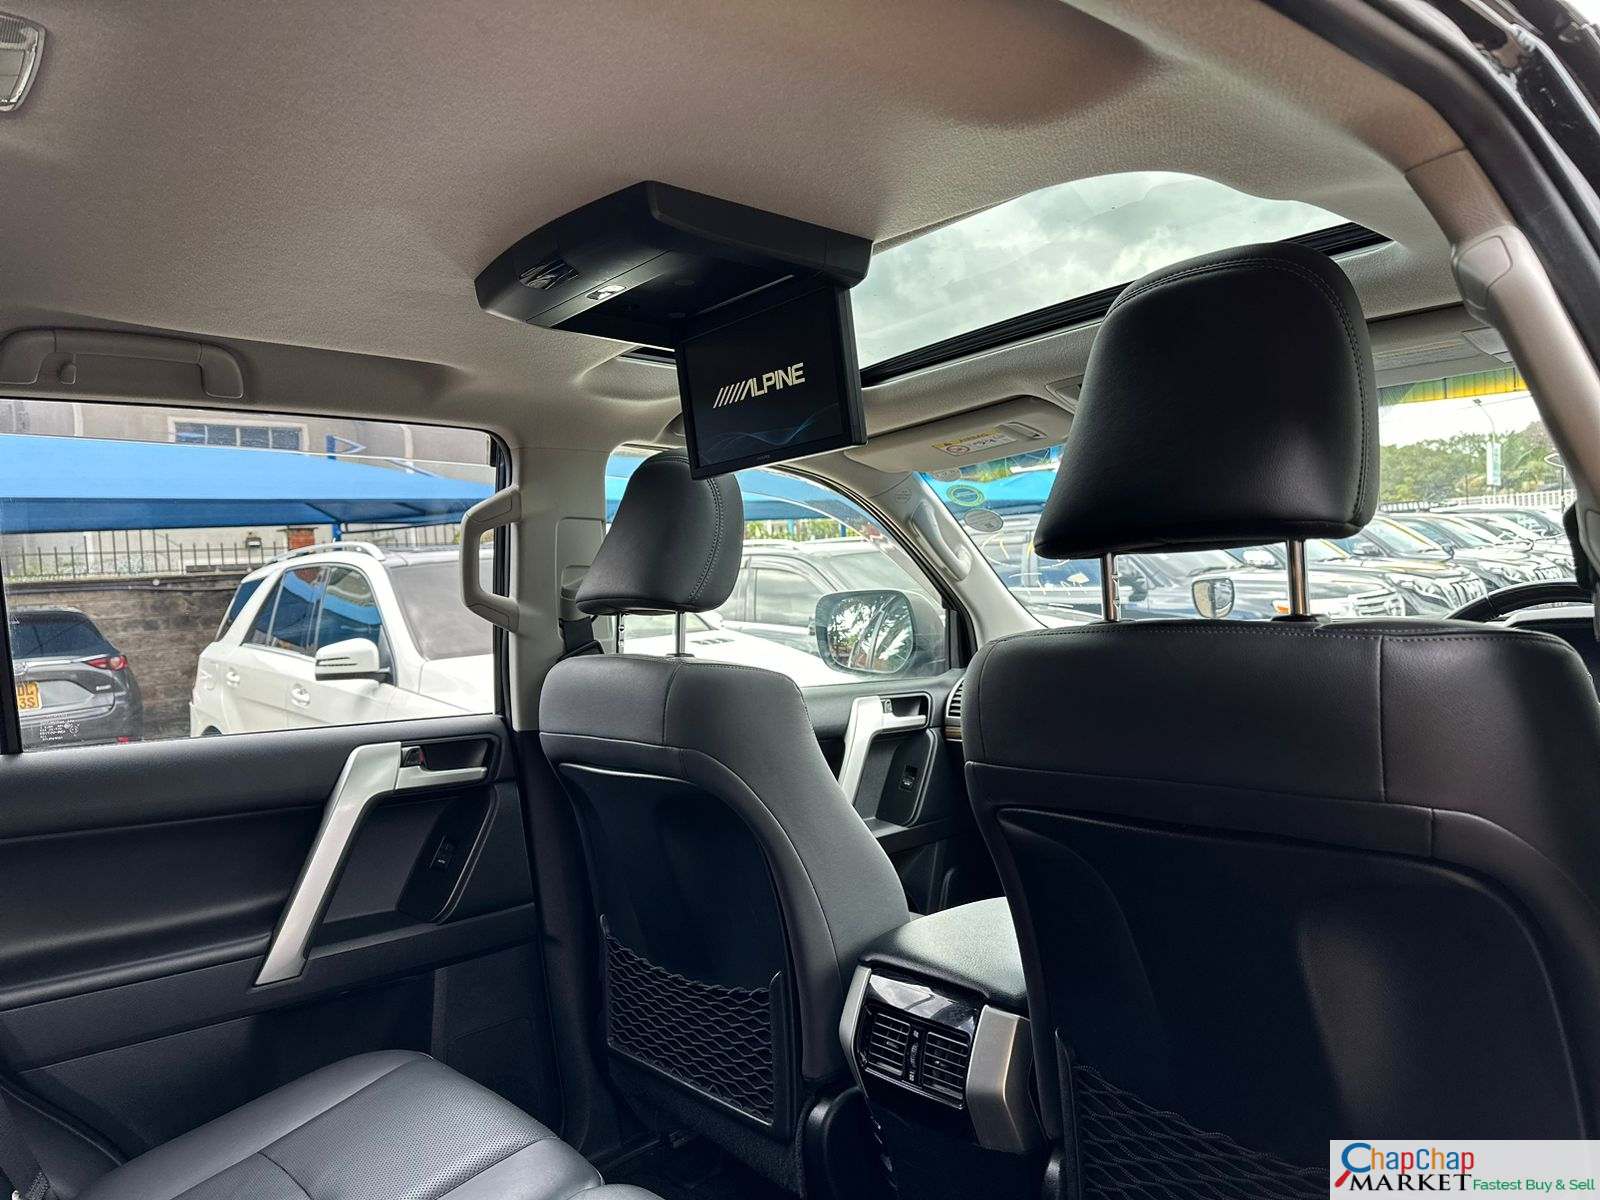 Toyota PRADO 2018 Sunroof HOT SALE TRADE IN OK EXCLUSIVE!